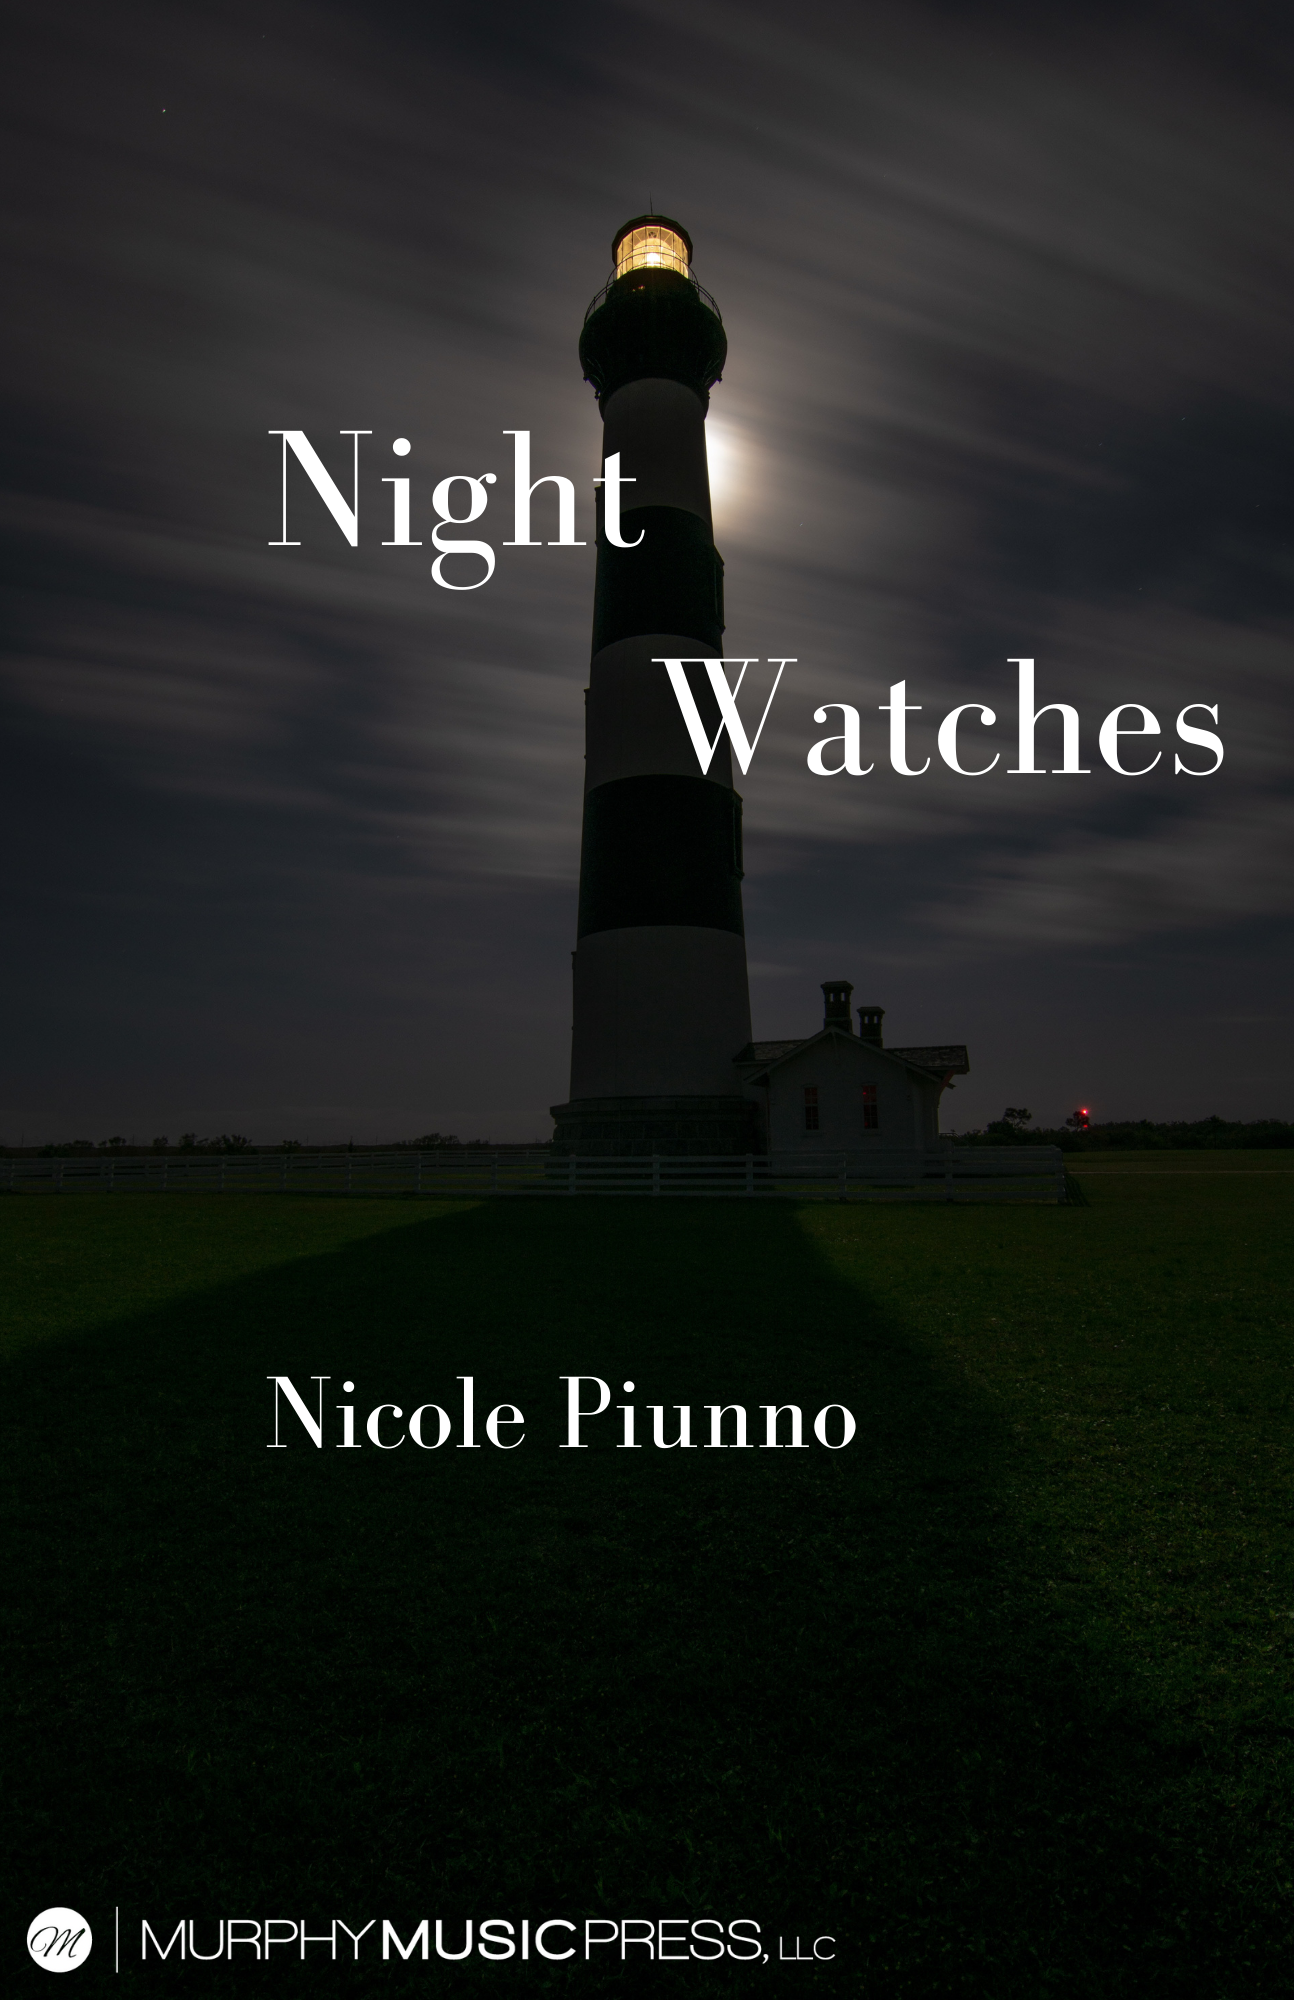 Night Watches by Nicole Piunno